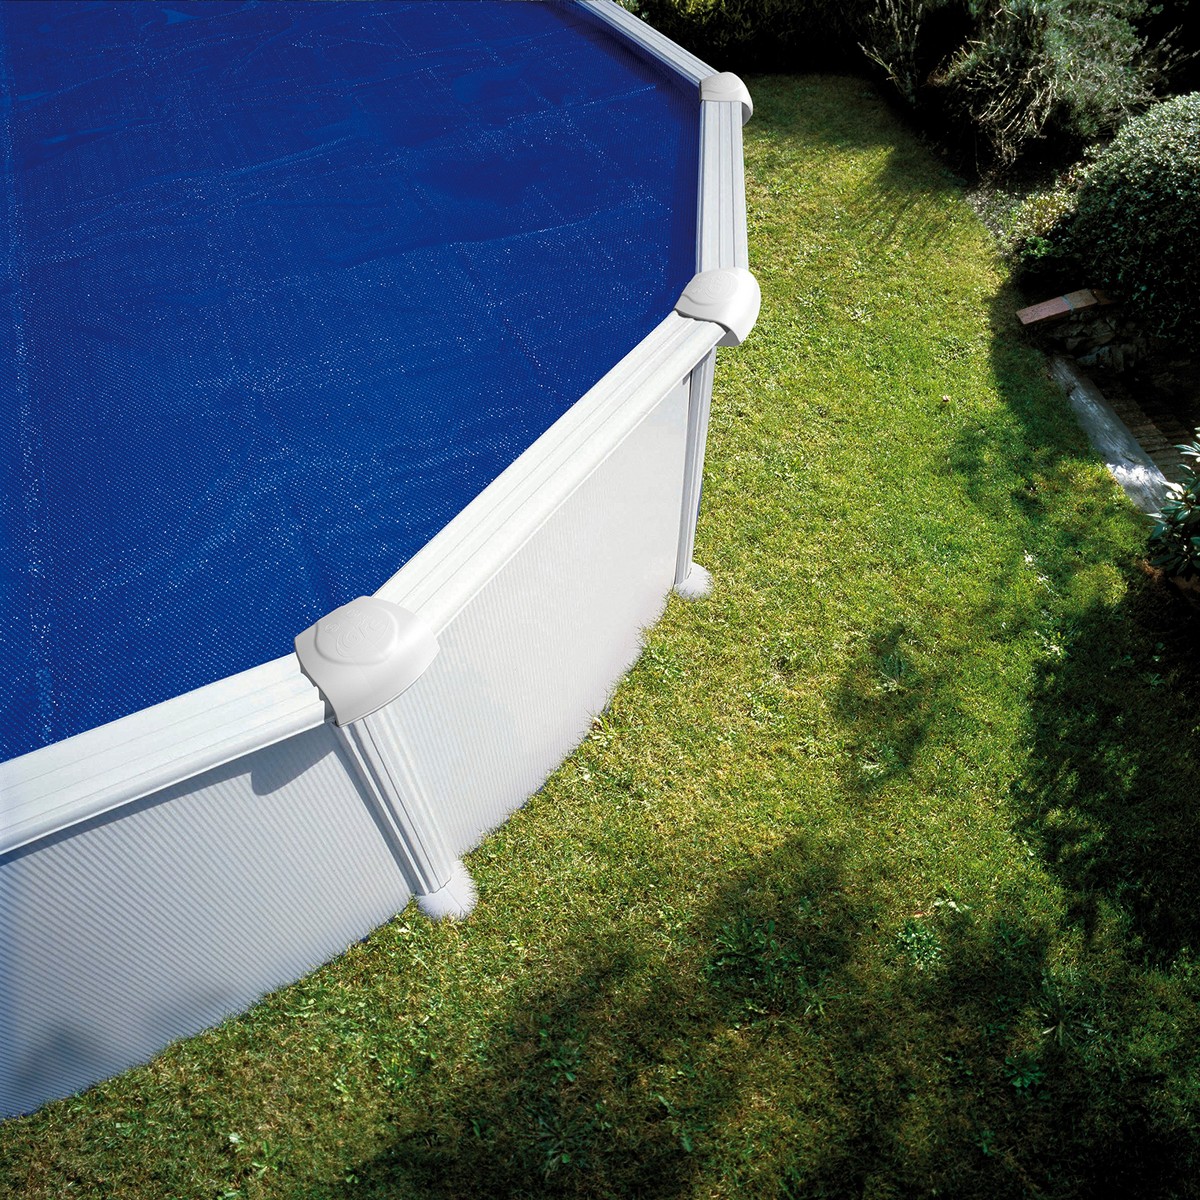 Swimming Pool Cover Gre CV350 Blue